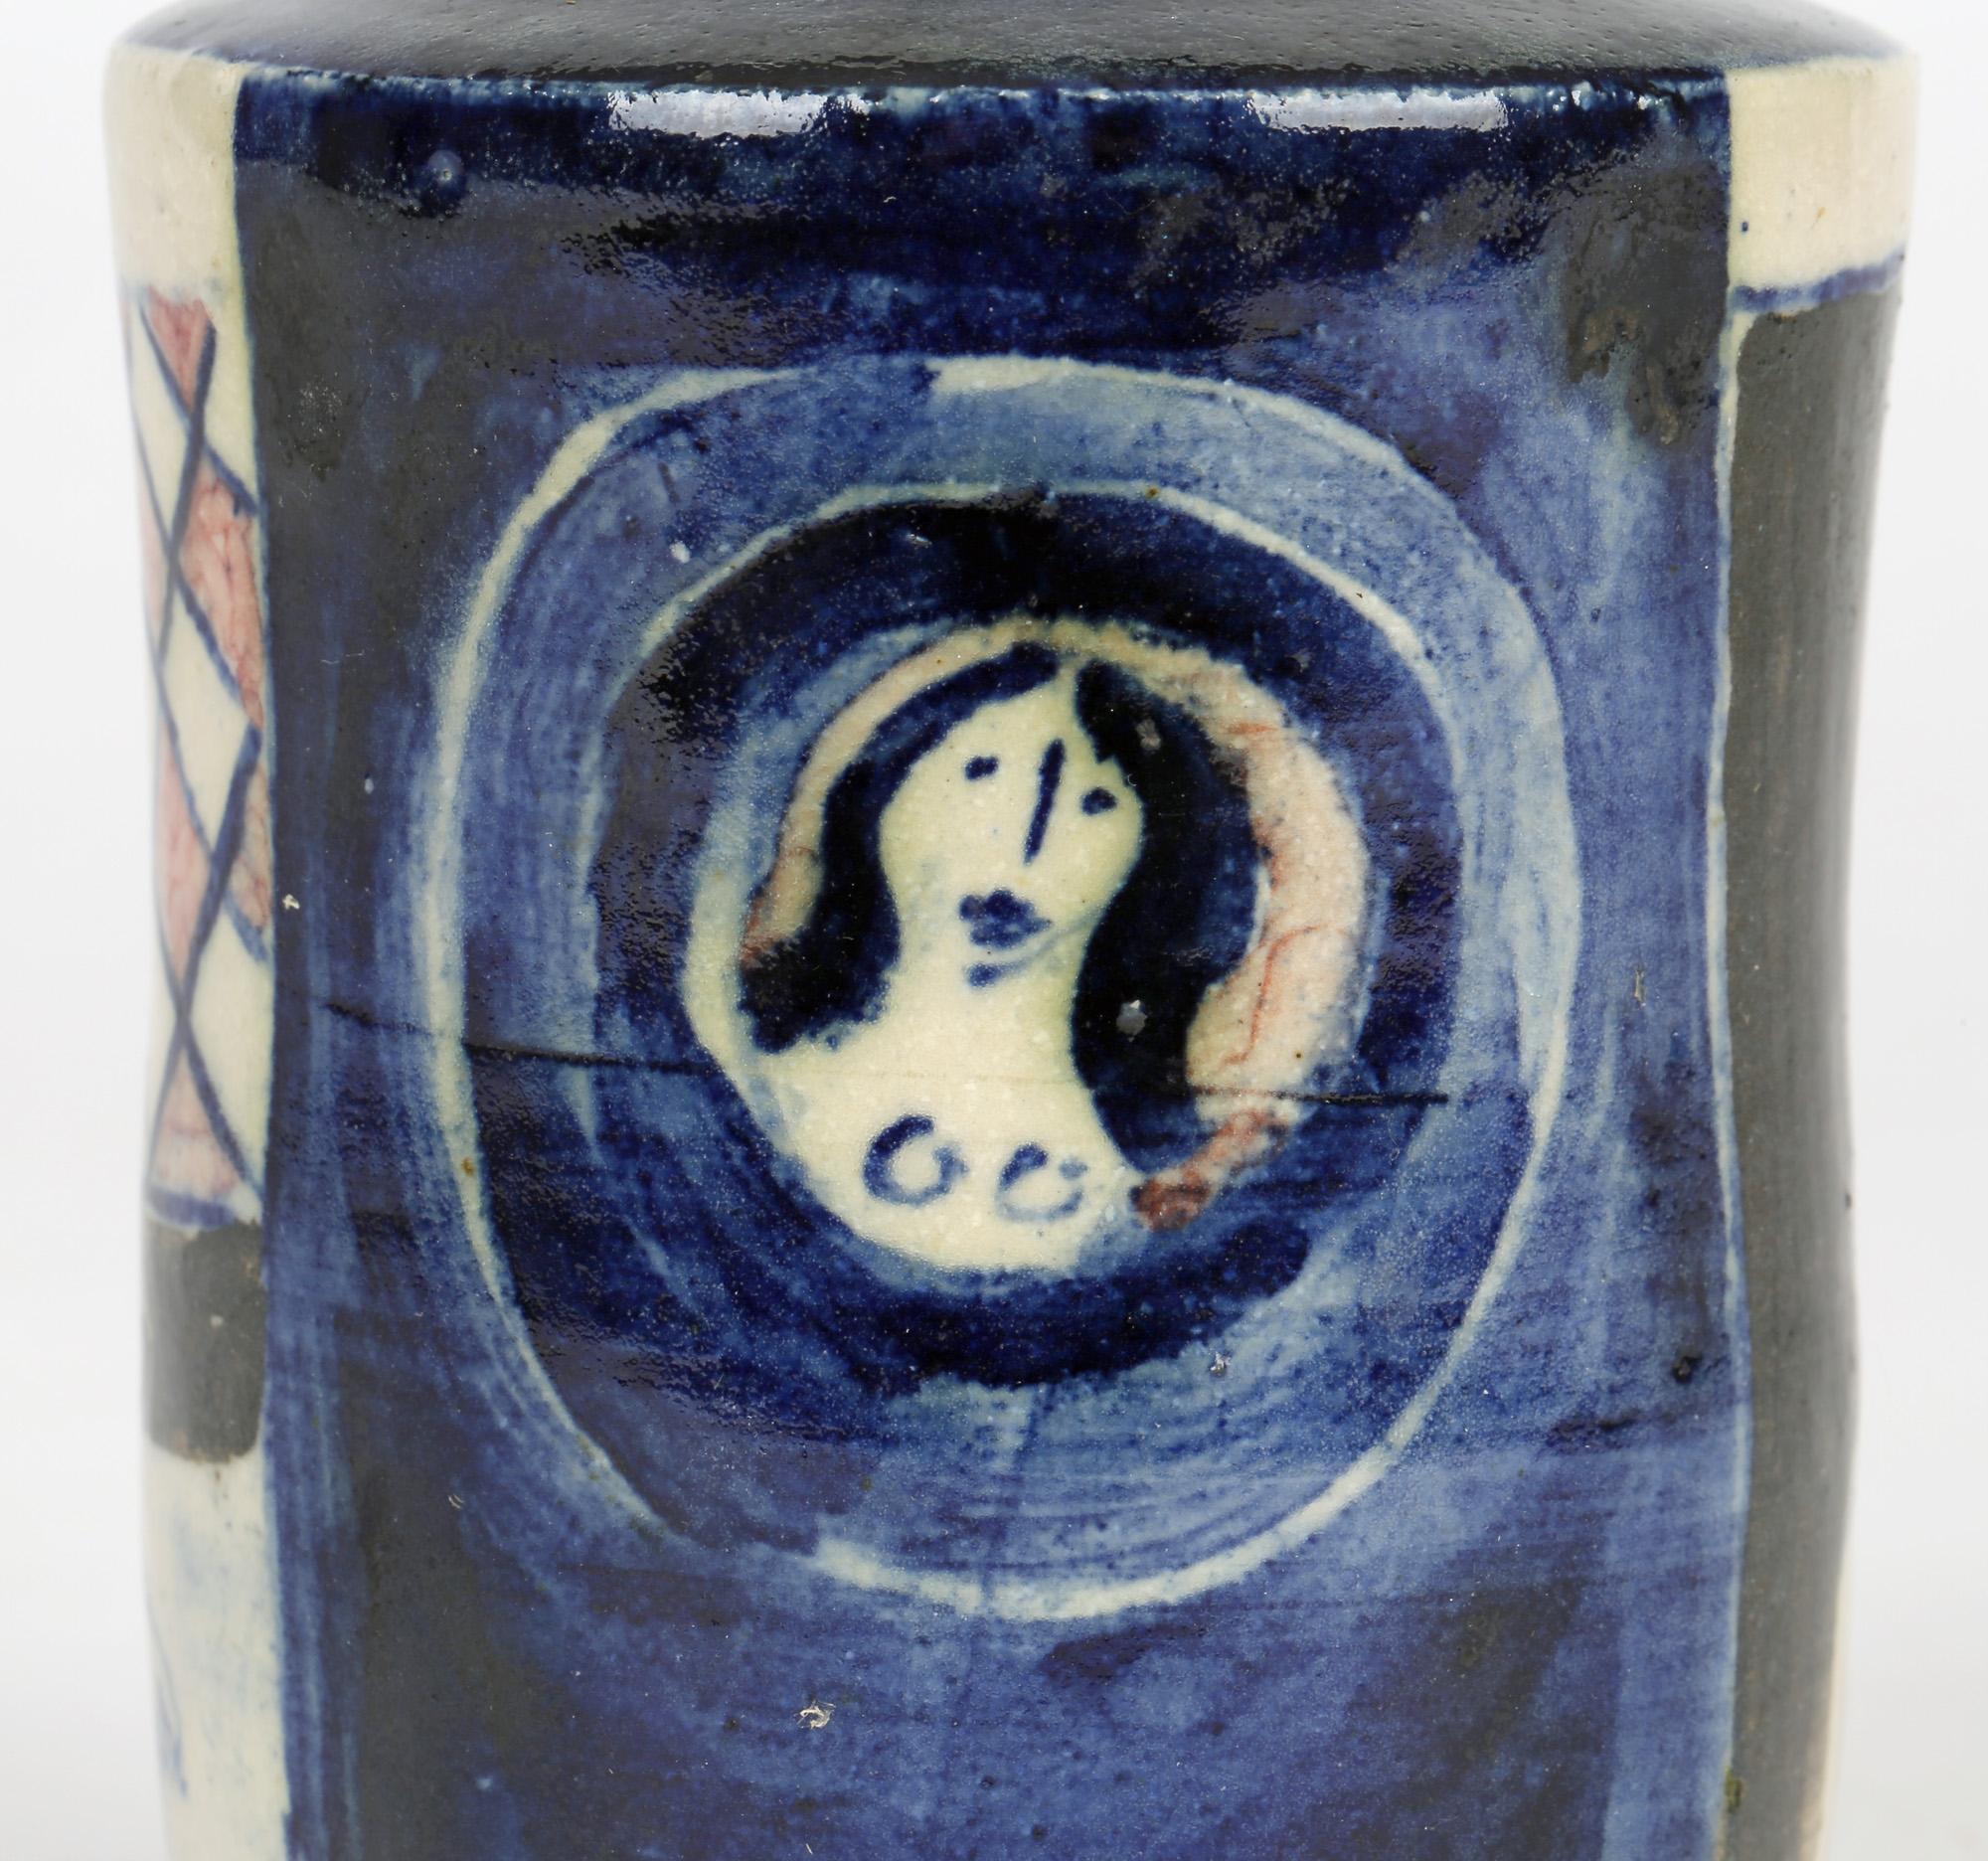 Porcelain Eric James Mellon Studio Pottery Ash Glazed Vase with Nudes